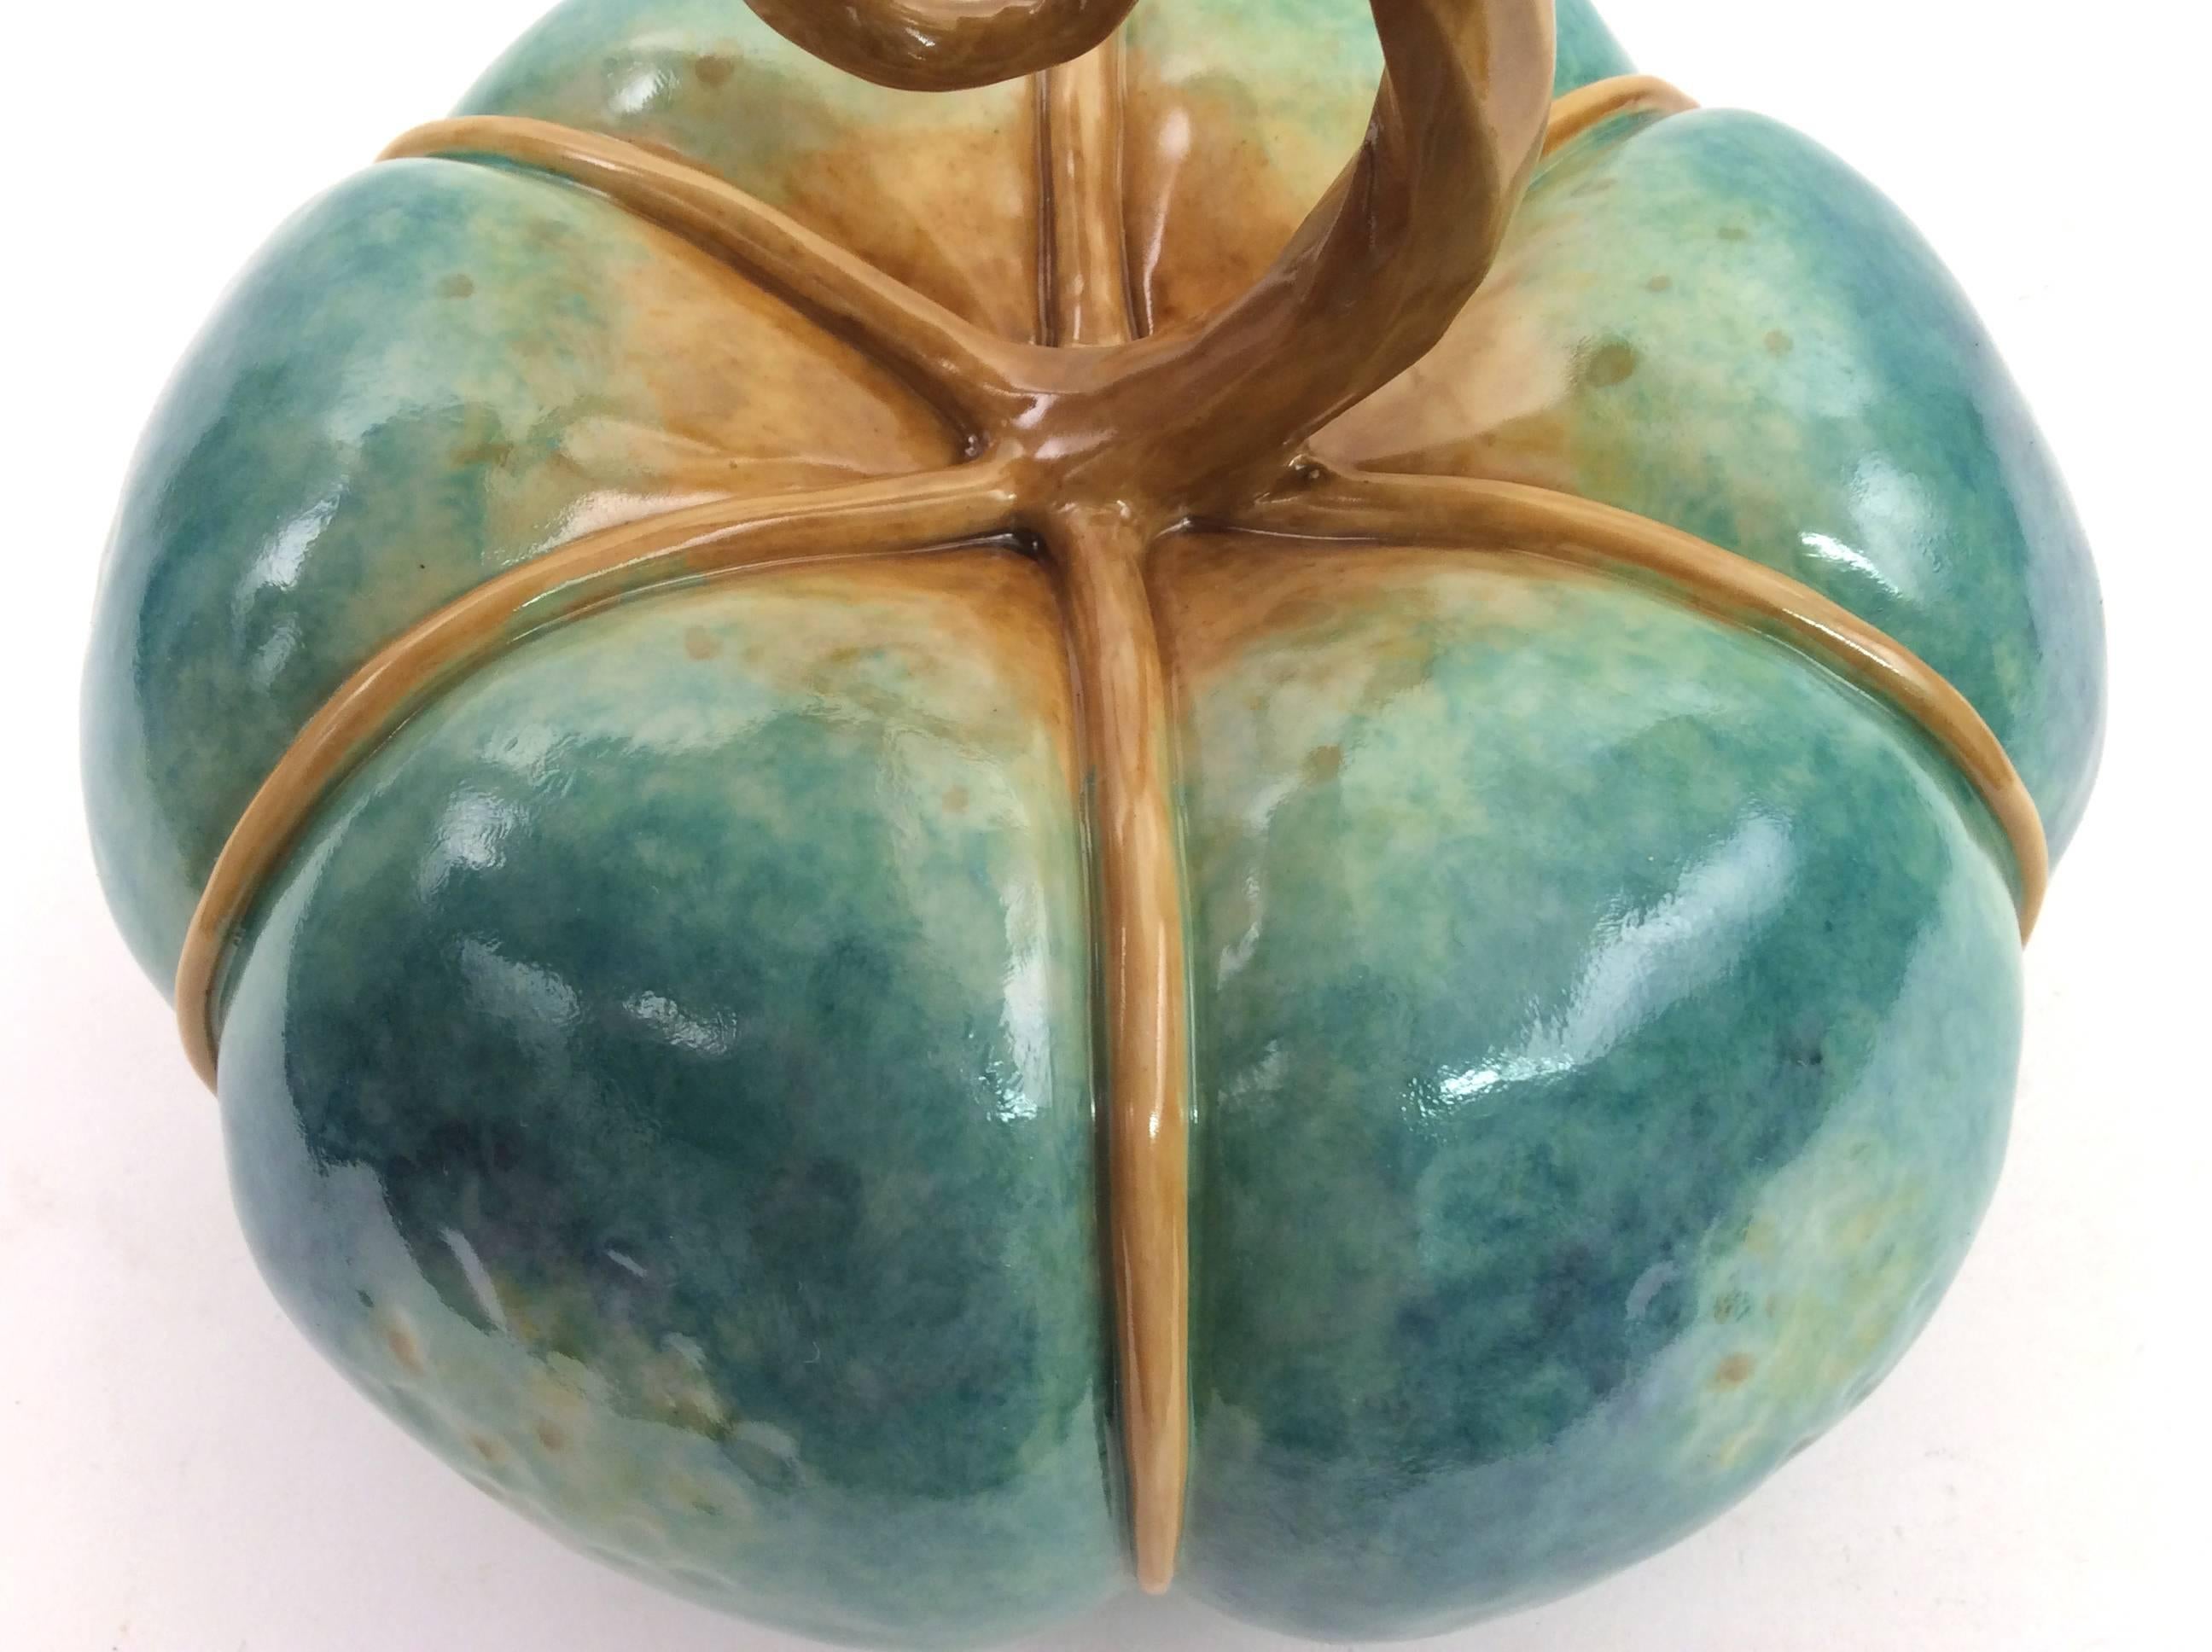 American Etruscan Colored Melon Sculpture For Sale